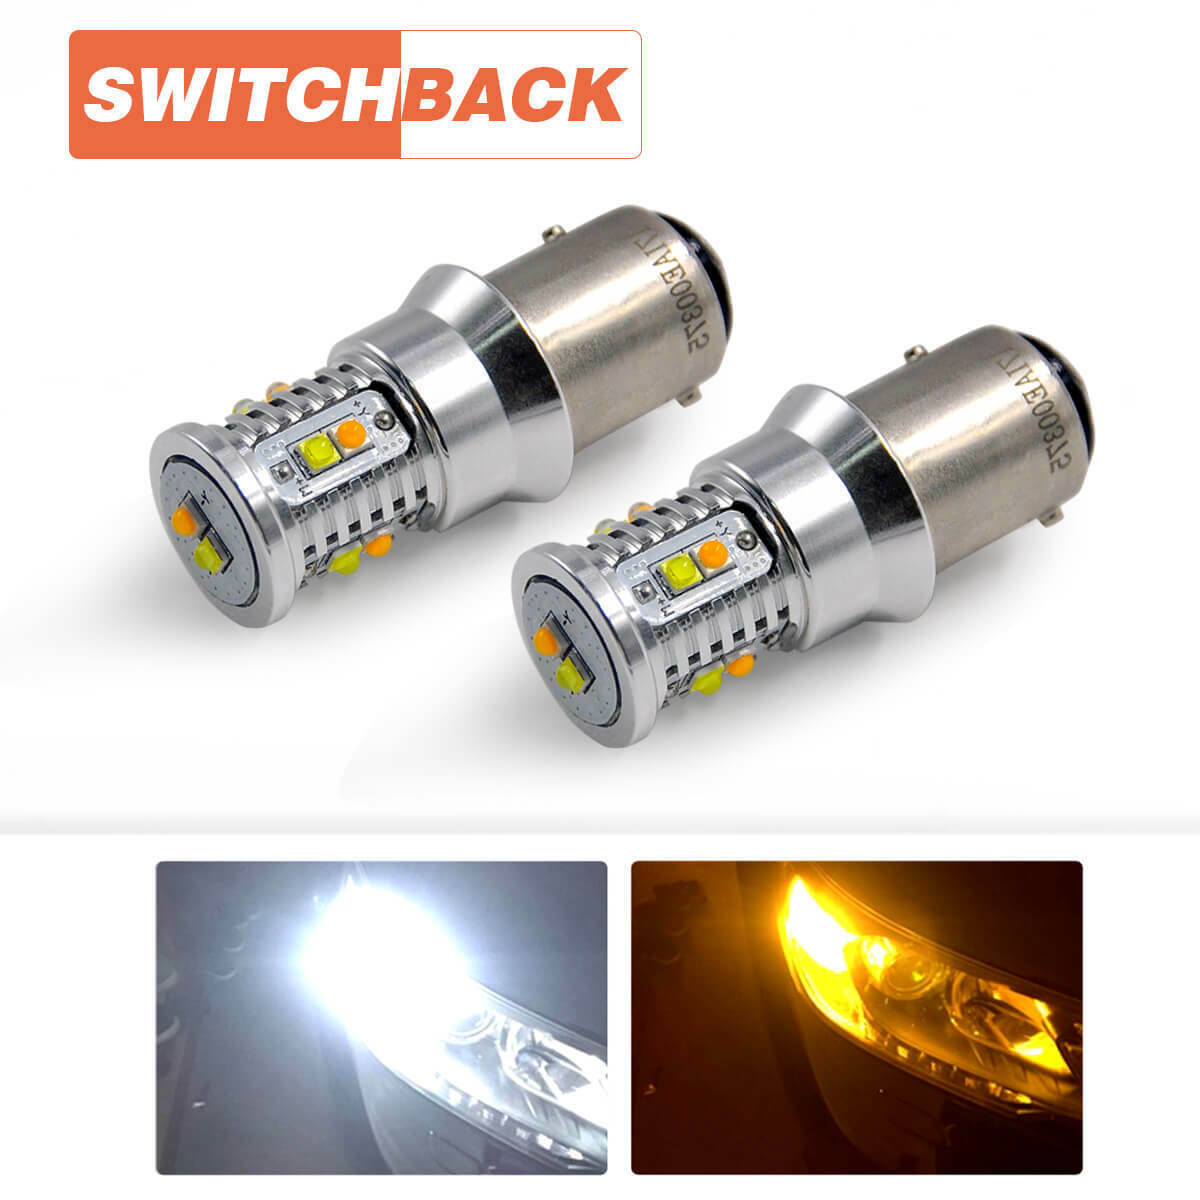 Switchback LED Front Turn Signal Light Bulbs 1157 2357 Amber White Free Return